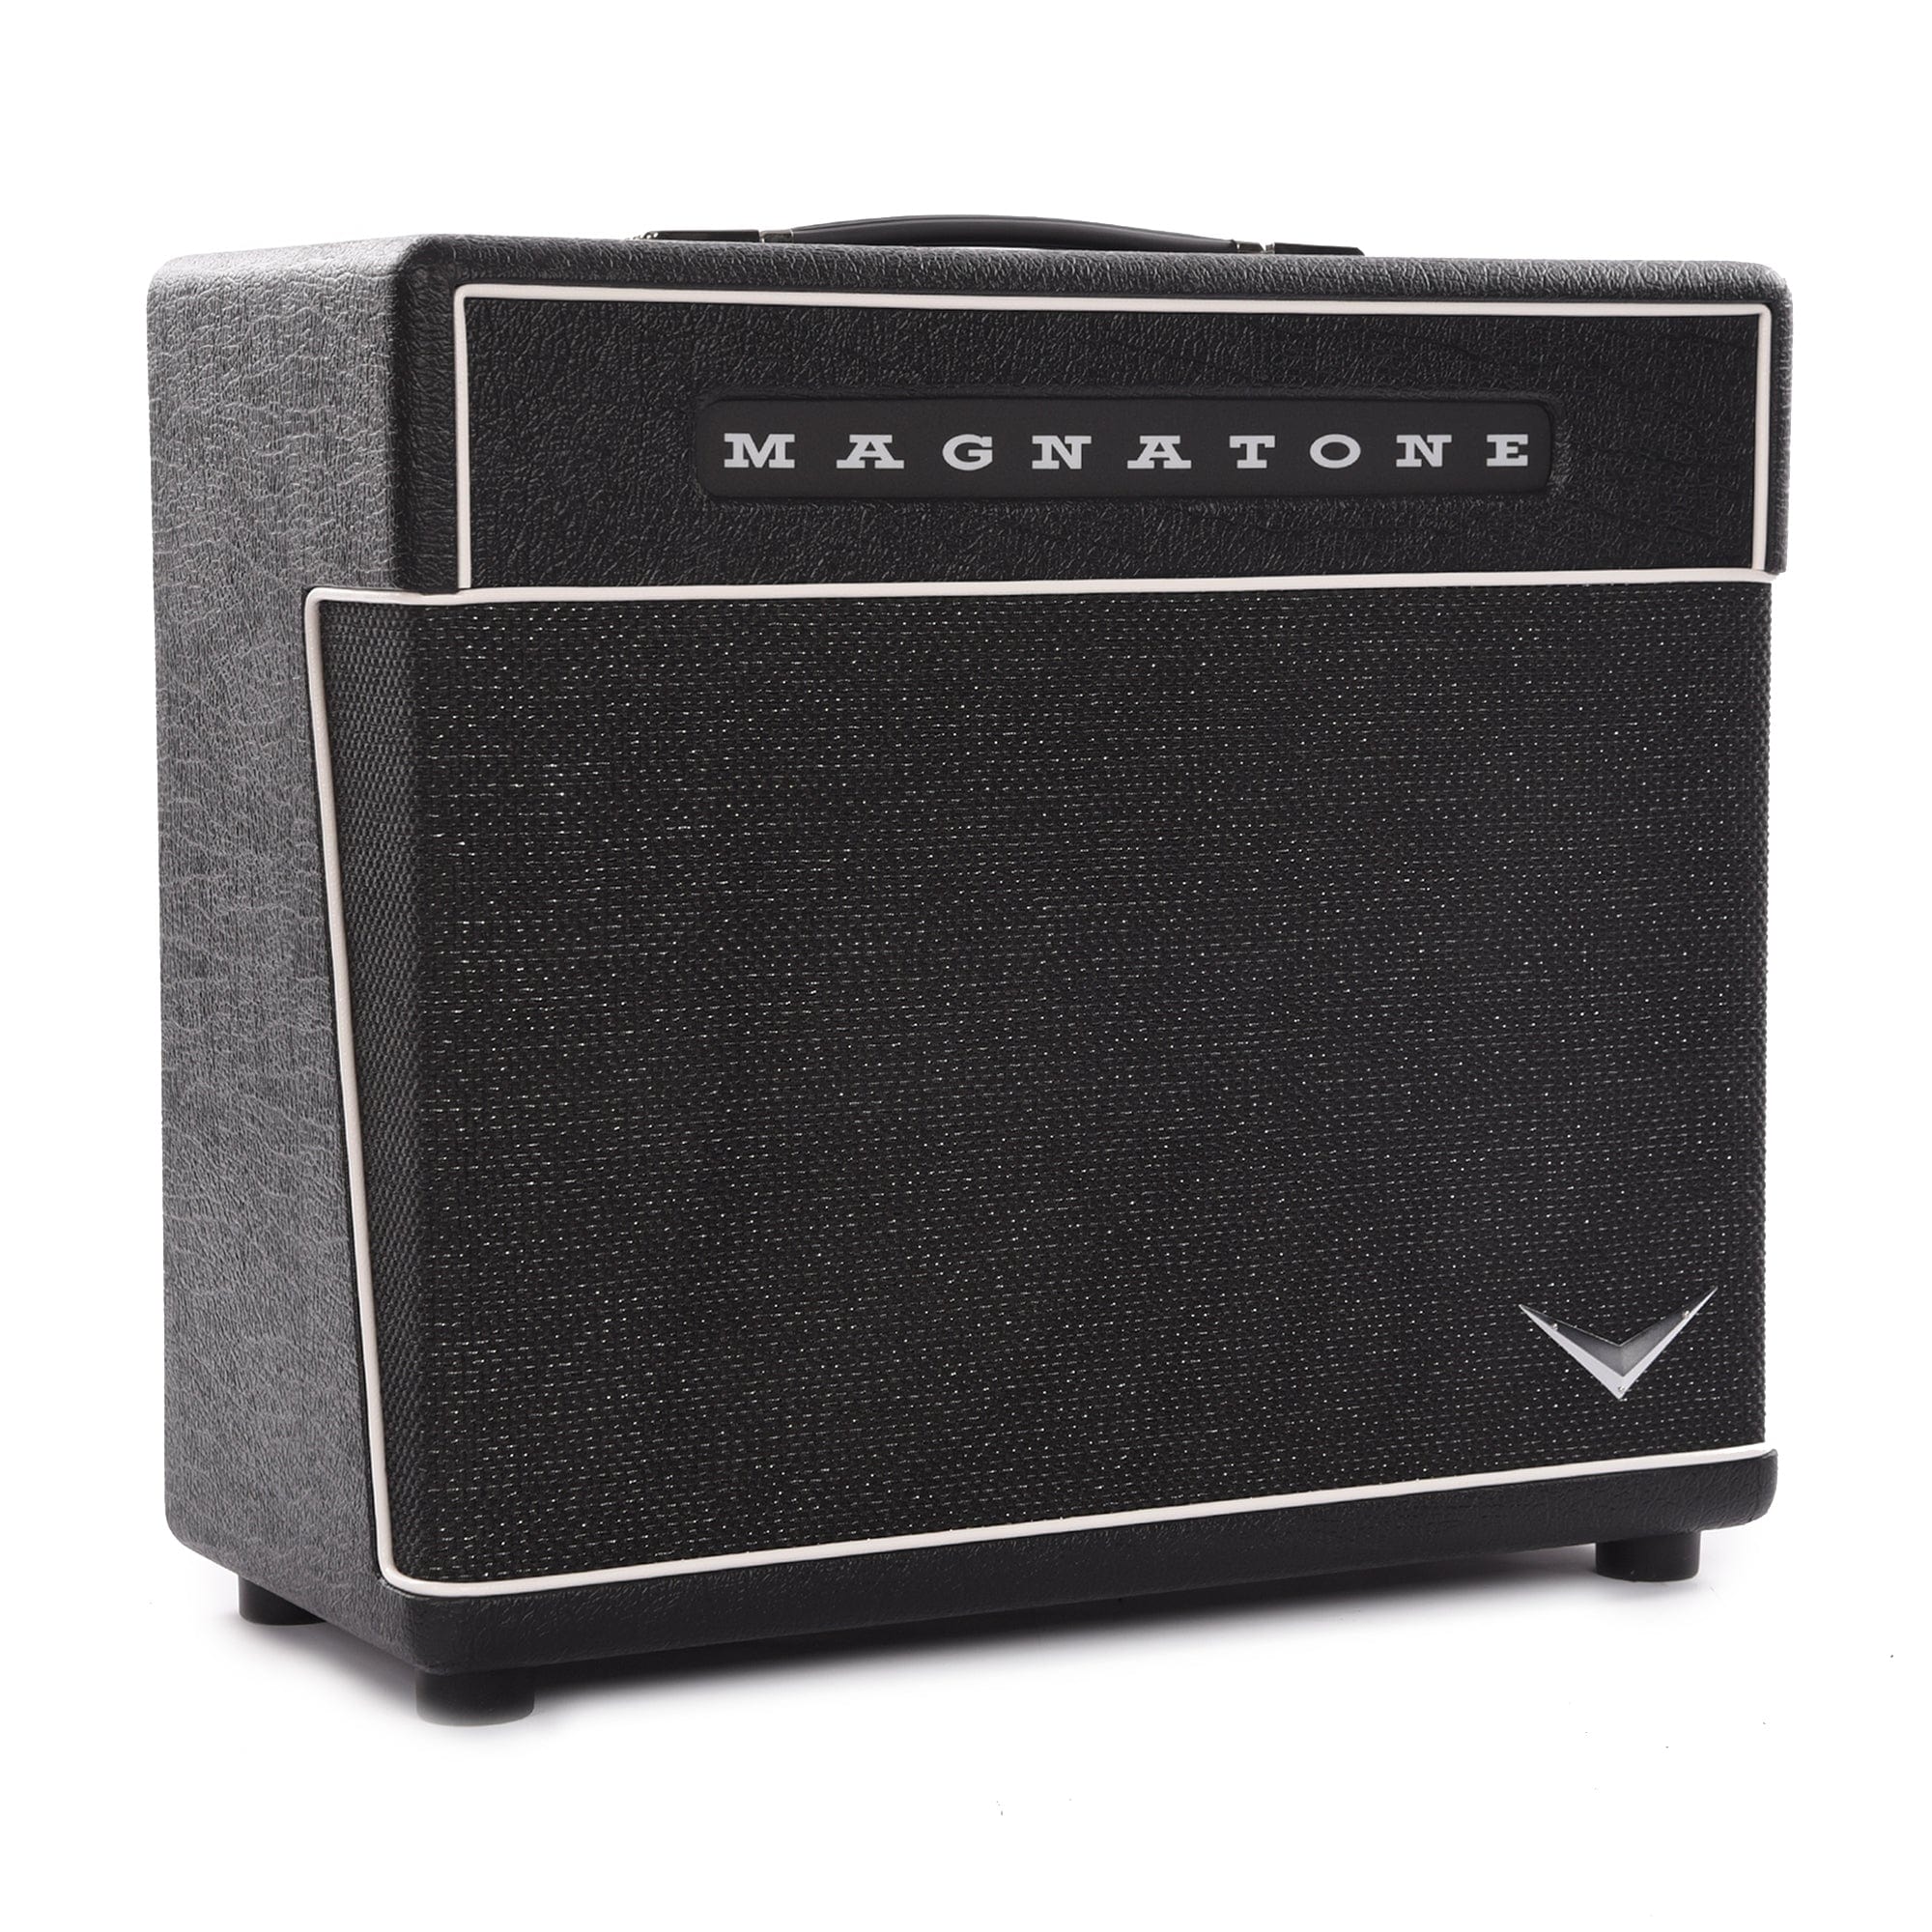 Magnatone Super Fifteen 1x12 15W Combo Amp Black Elephant Edition Amps / Guitar Combos